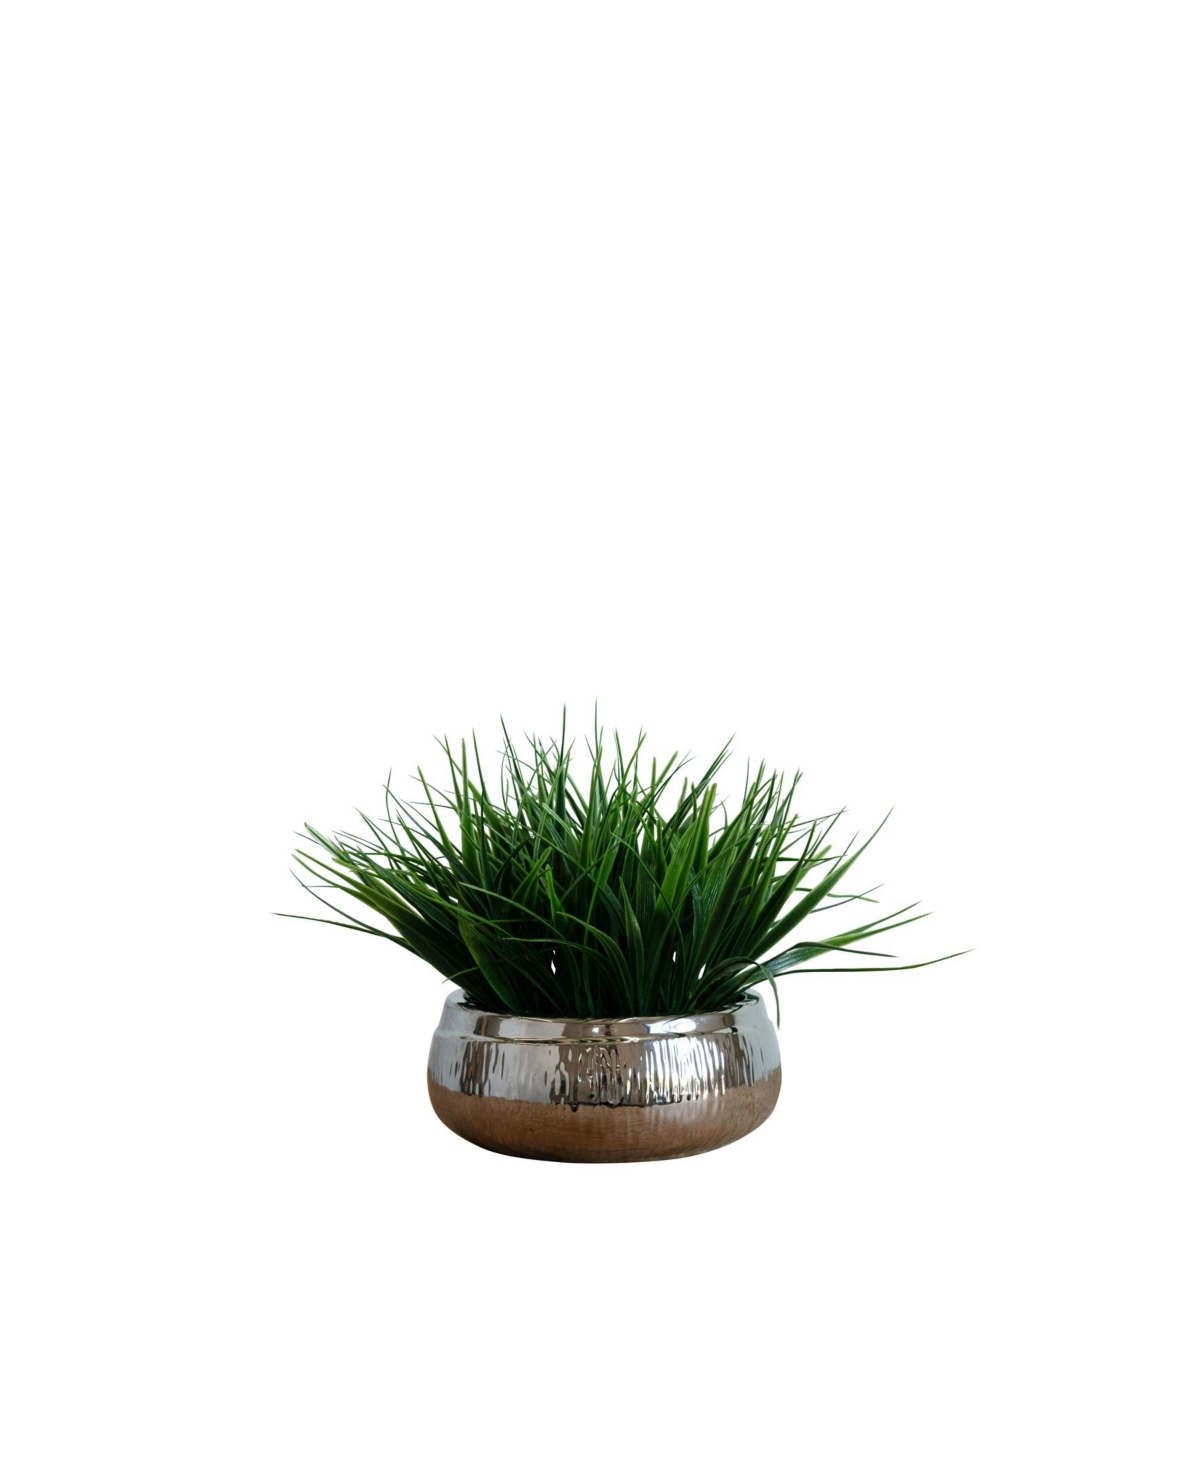 Desktop Artificial Grass Bowl in Decorative Pot, 9" - Silver-Tone